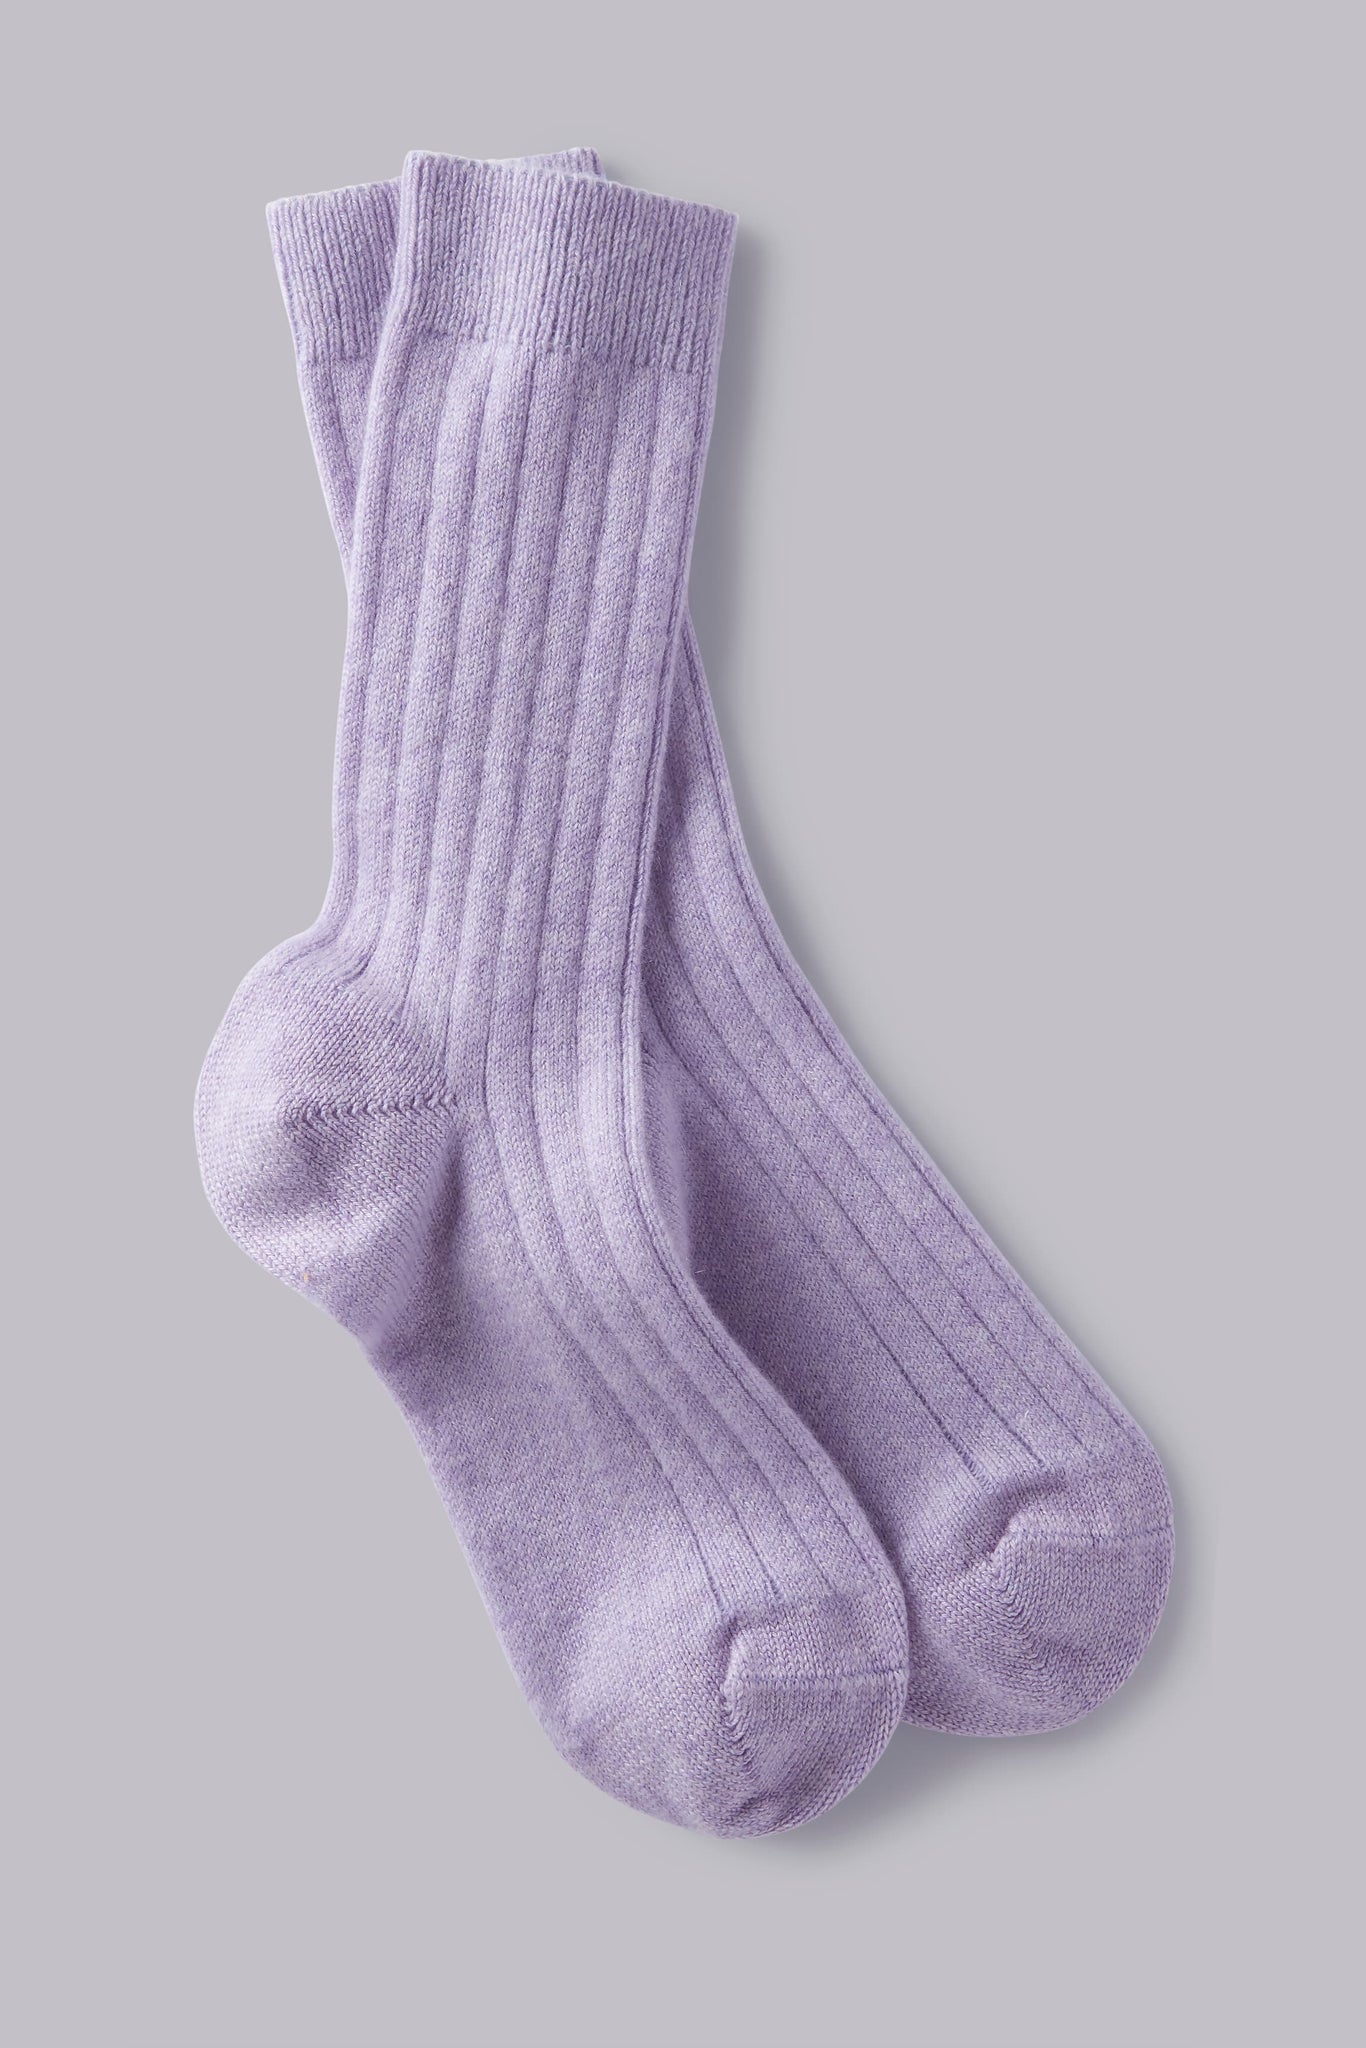 Soft Scottish Cashmere Women's Socks - Comfortable Lavender Socks by Lavender Hill Clothing - Cozy Bed Socks